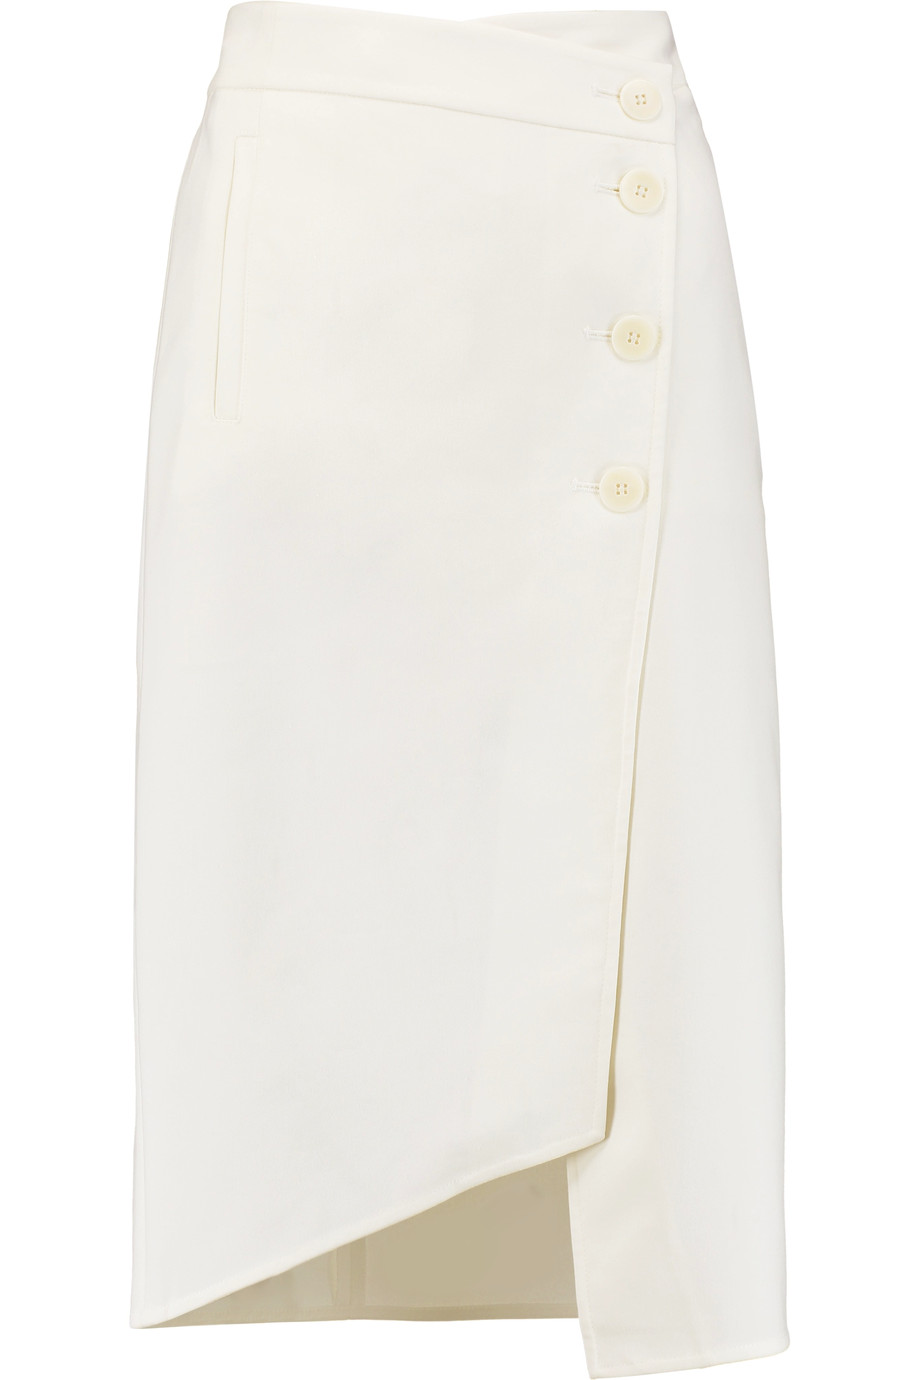 Tibi Anson Asymmetric Cotton-blend Wrap Skirt | ModeSens